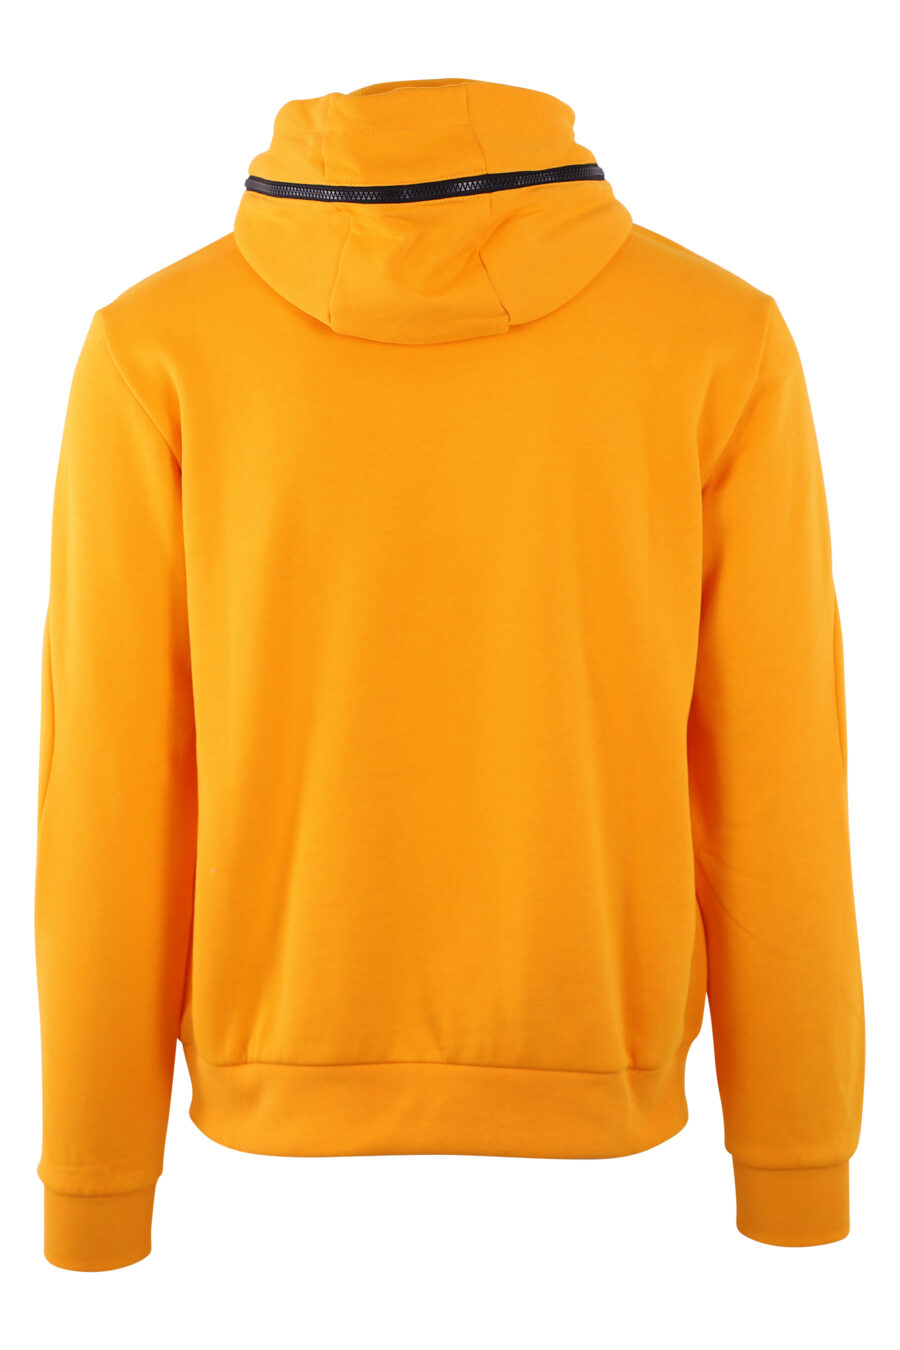 Sudadera con capucha amarilla y logo "lux identity" monogram - IMG 2856 1